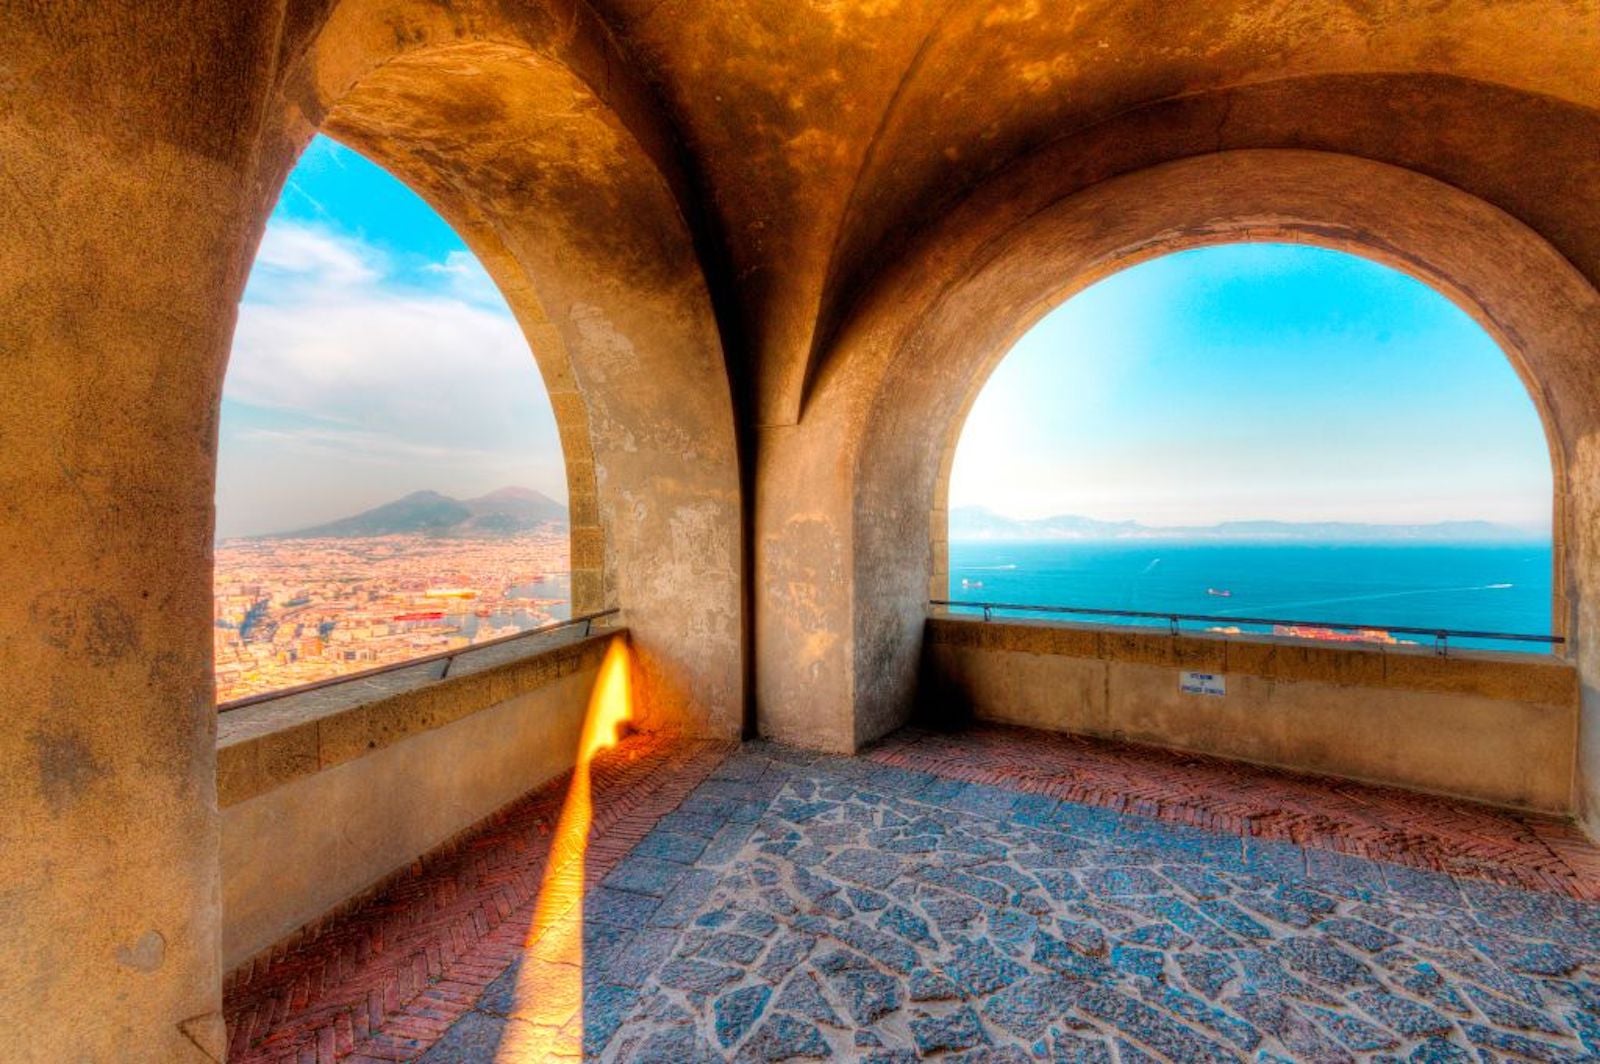 Italy. Campania. Naples. cityscape from Castel Sant'Elmo. Vesuvius in background